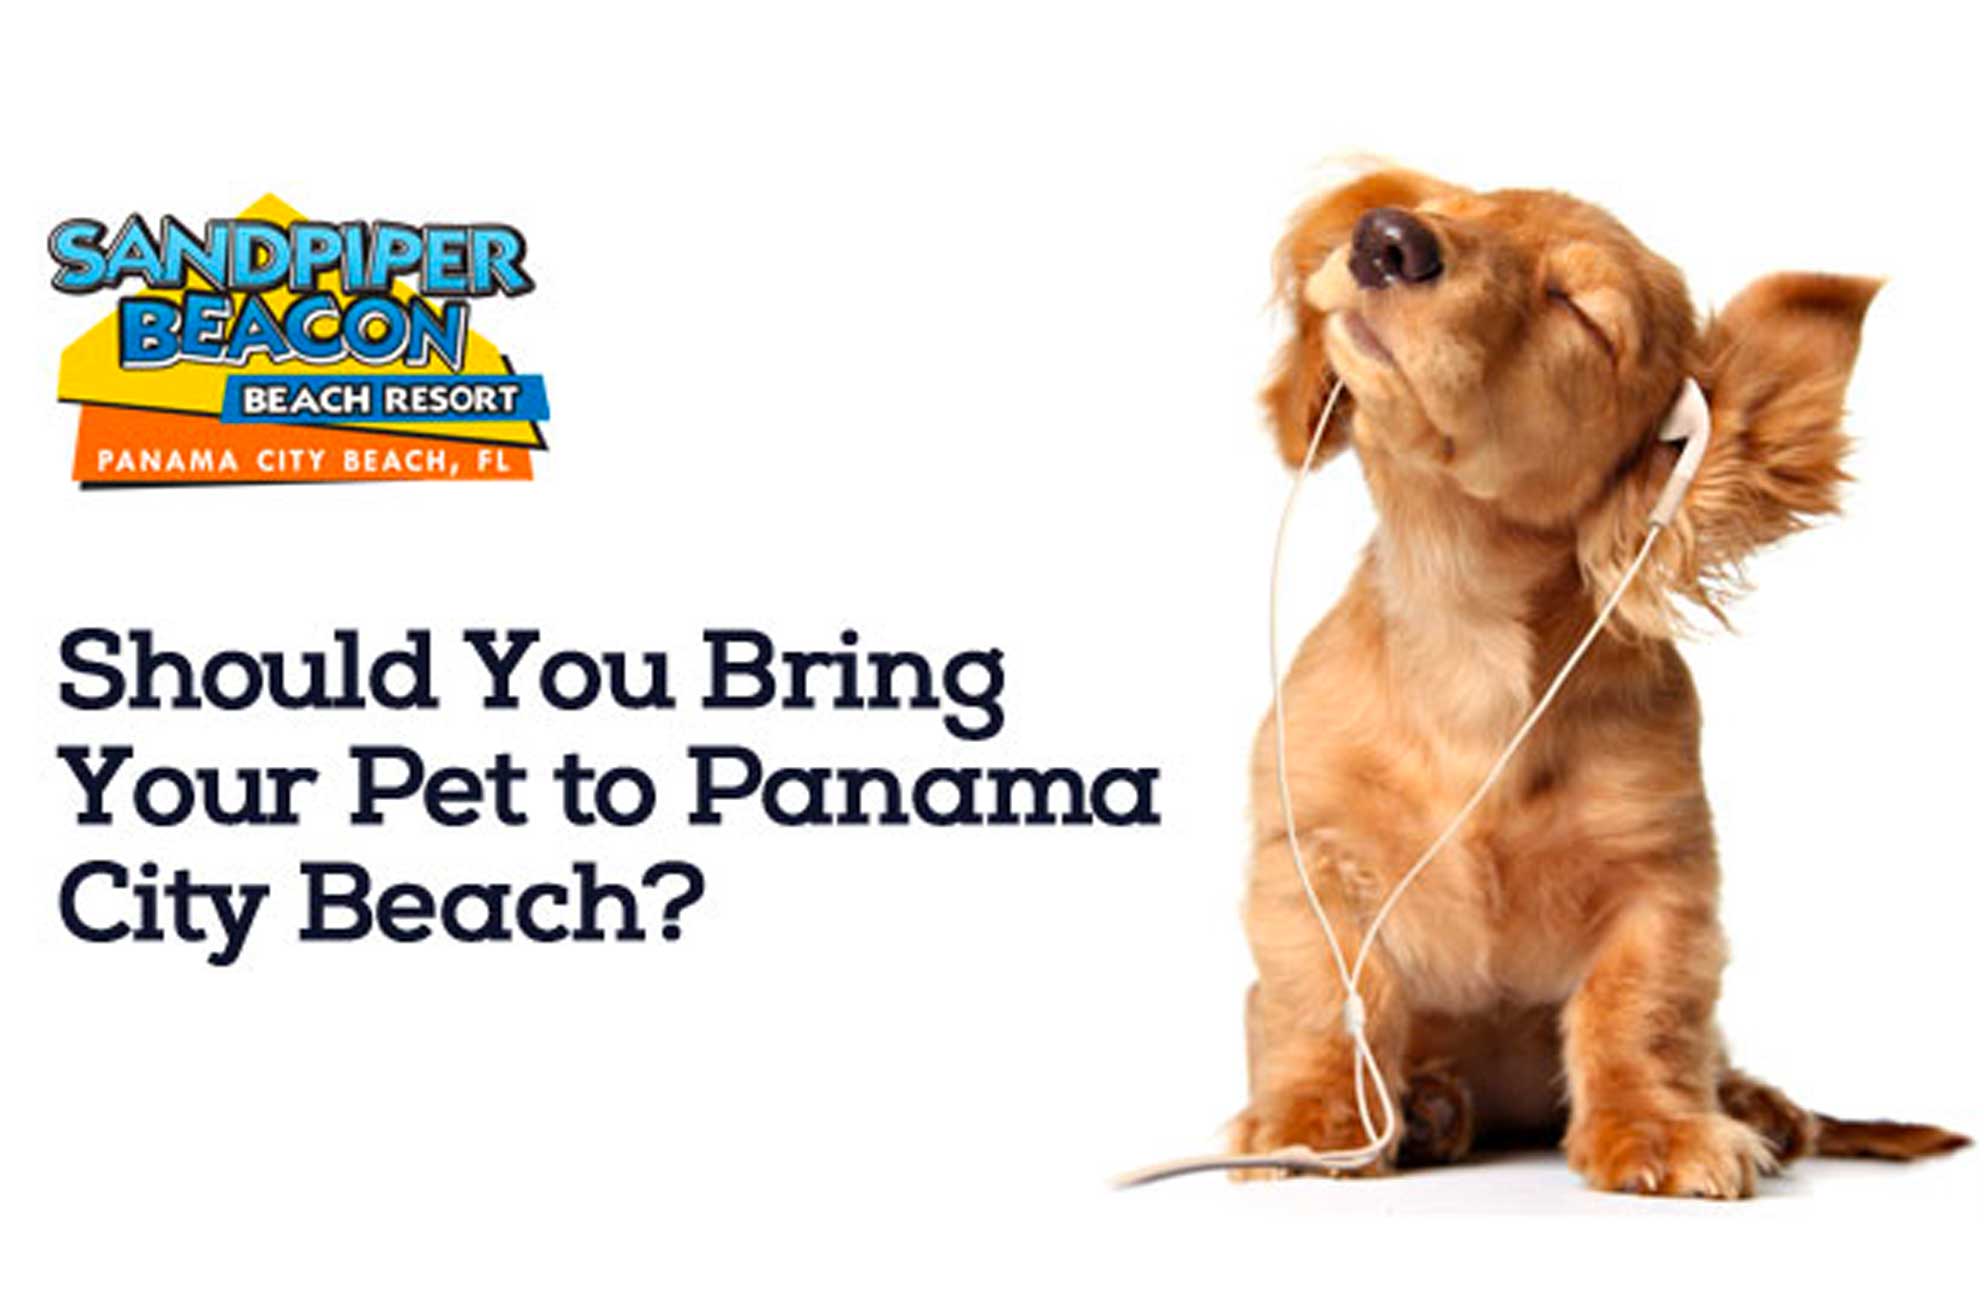 Should You Bring Your Pet?